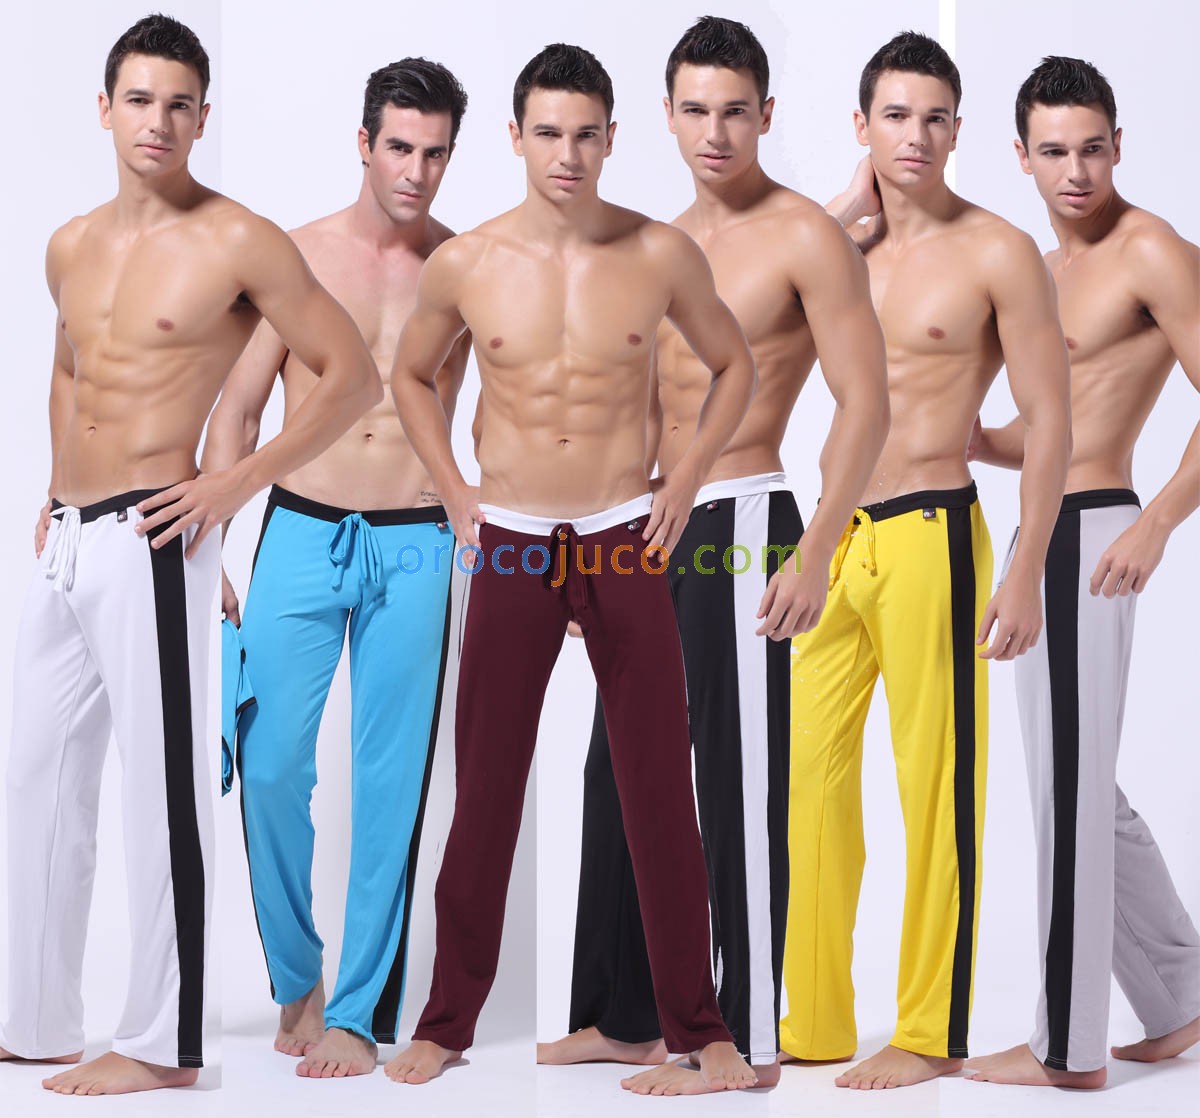 Men’s Comfortable Long Loungewear Pants  3 Size S M L Gym Casual Sports YOGA Running Trousers Underwear 6 Colors MU168 